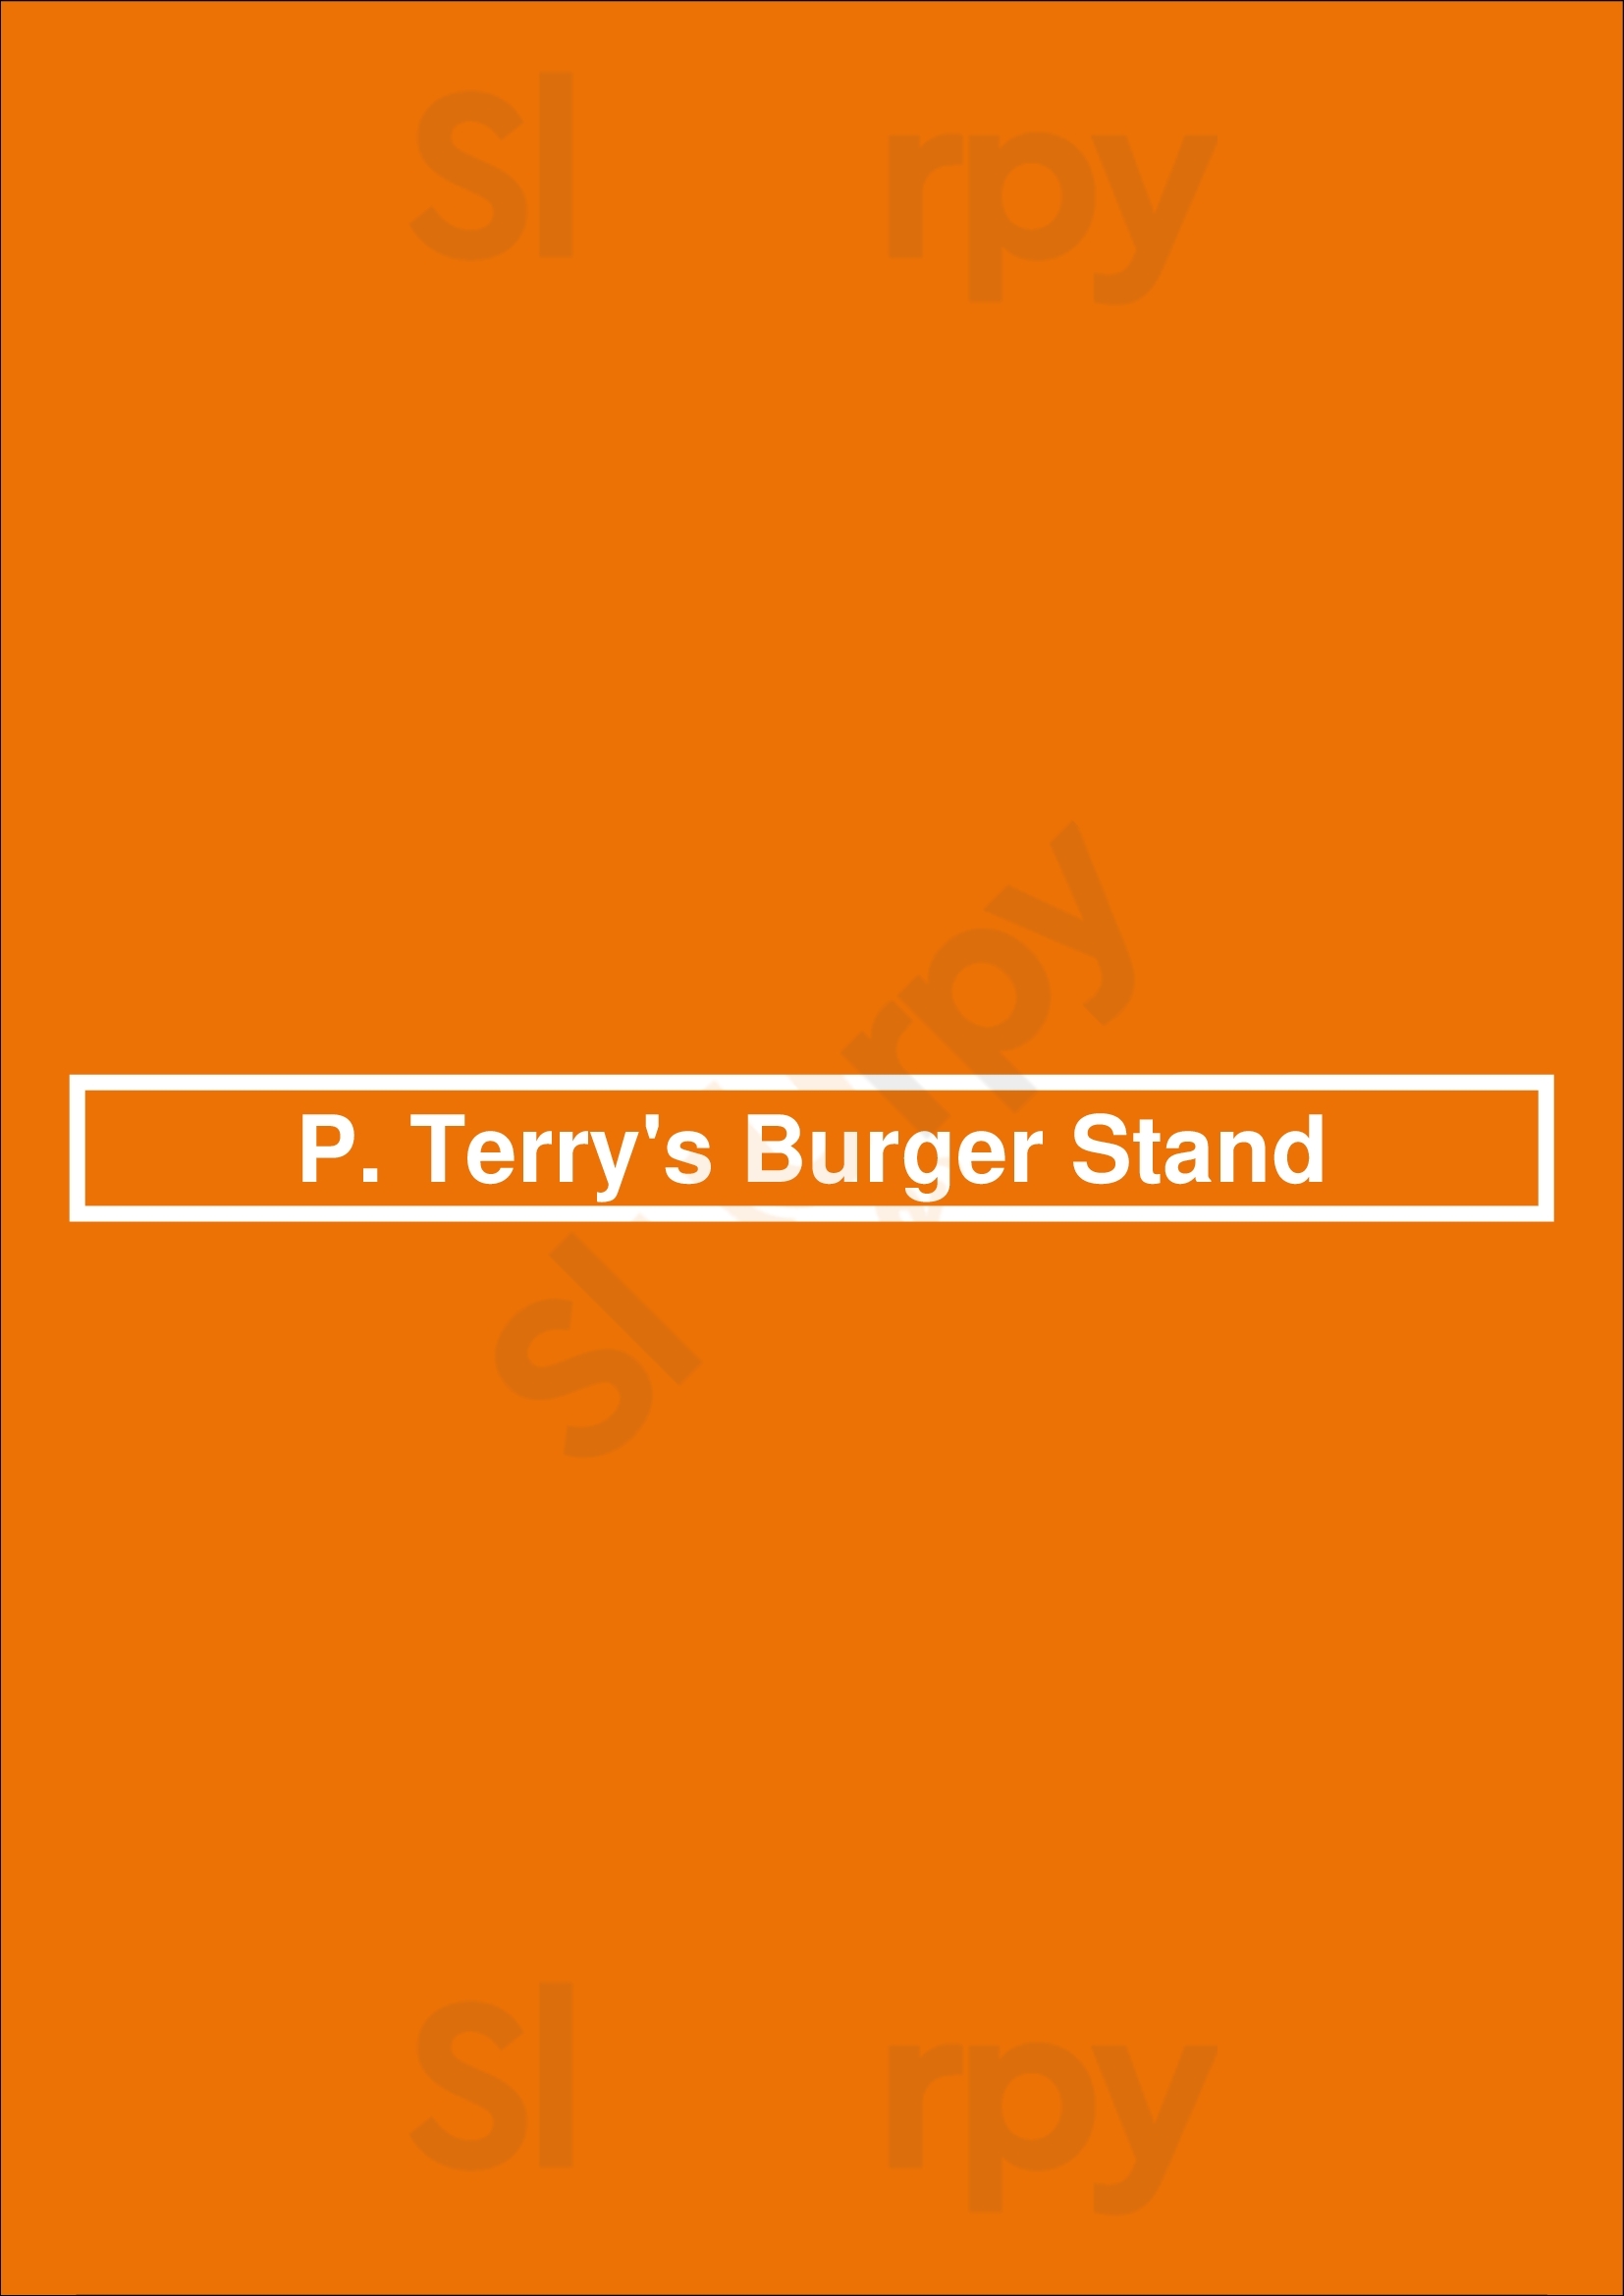 P. Terry's Burger Stand #1 Austin Menu - 1